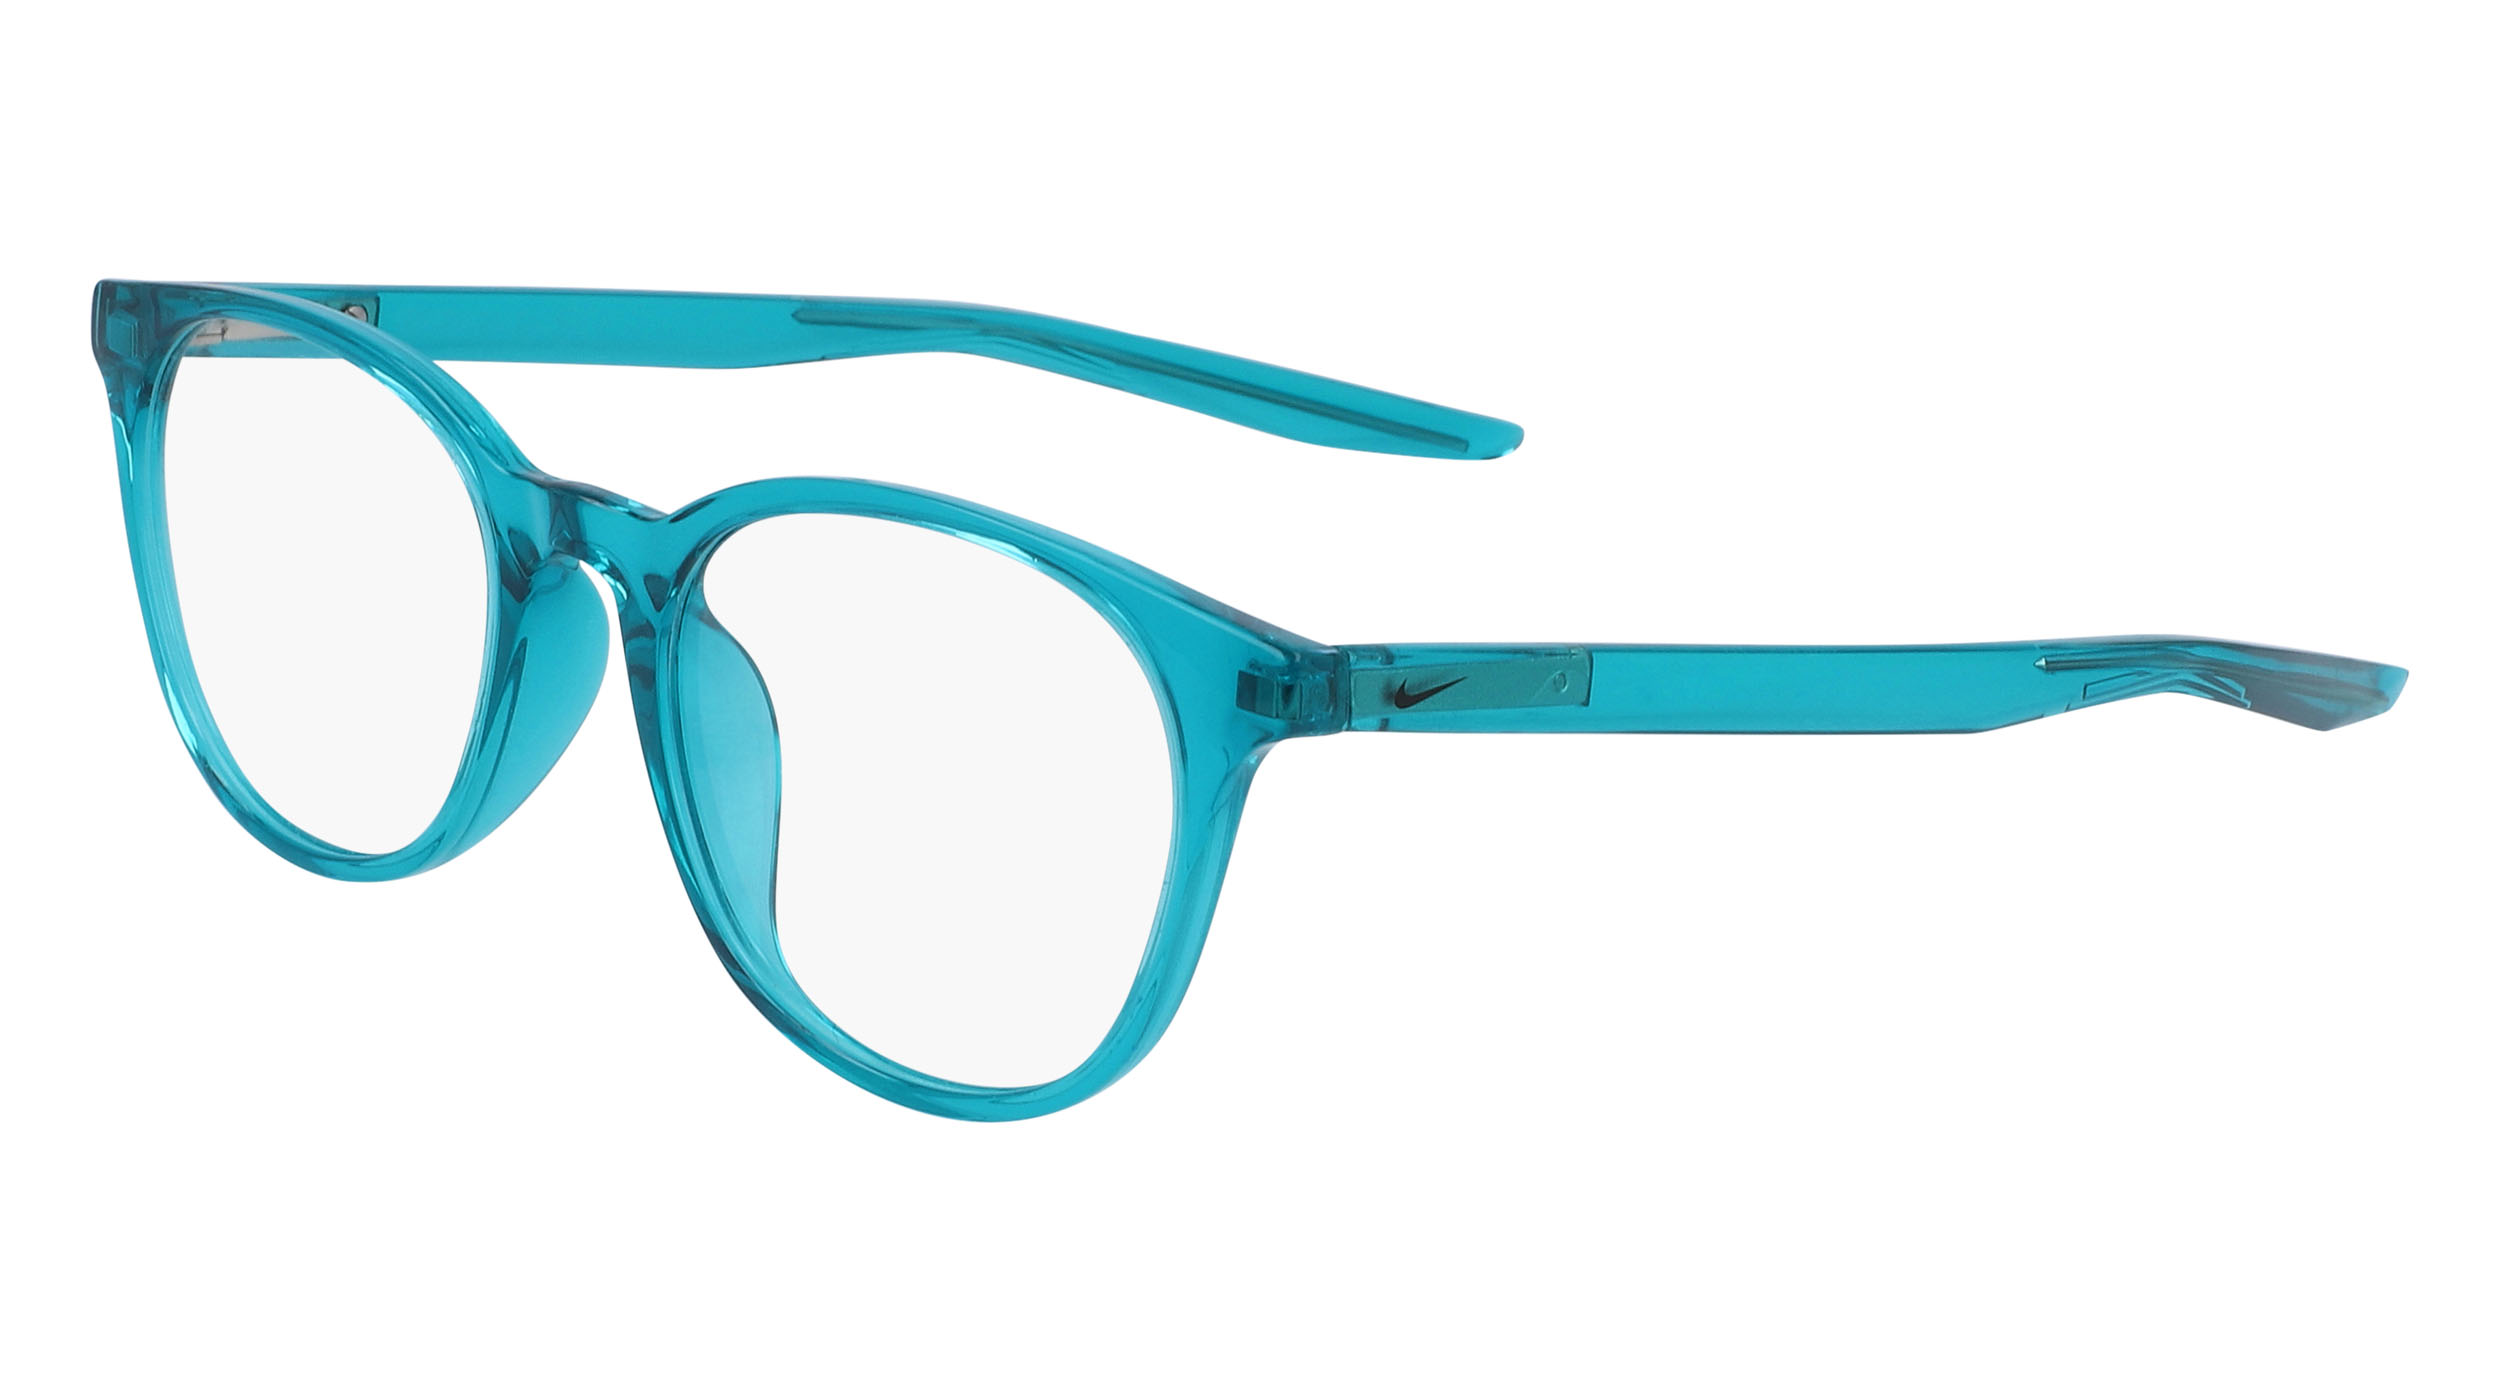 Glasses Nike 5020, turquoise colour - Doyle